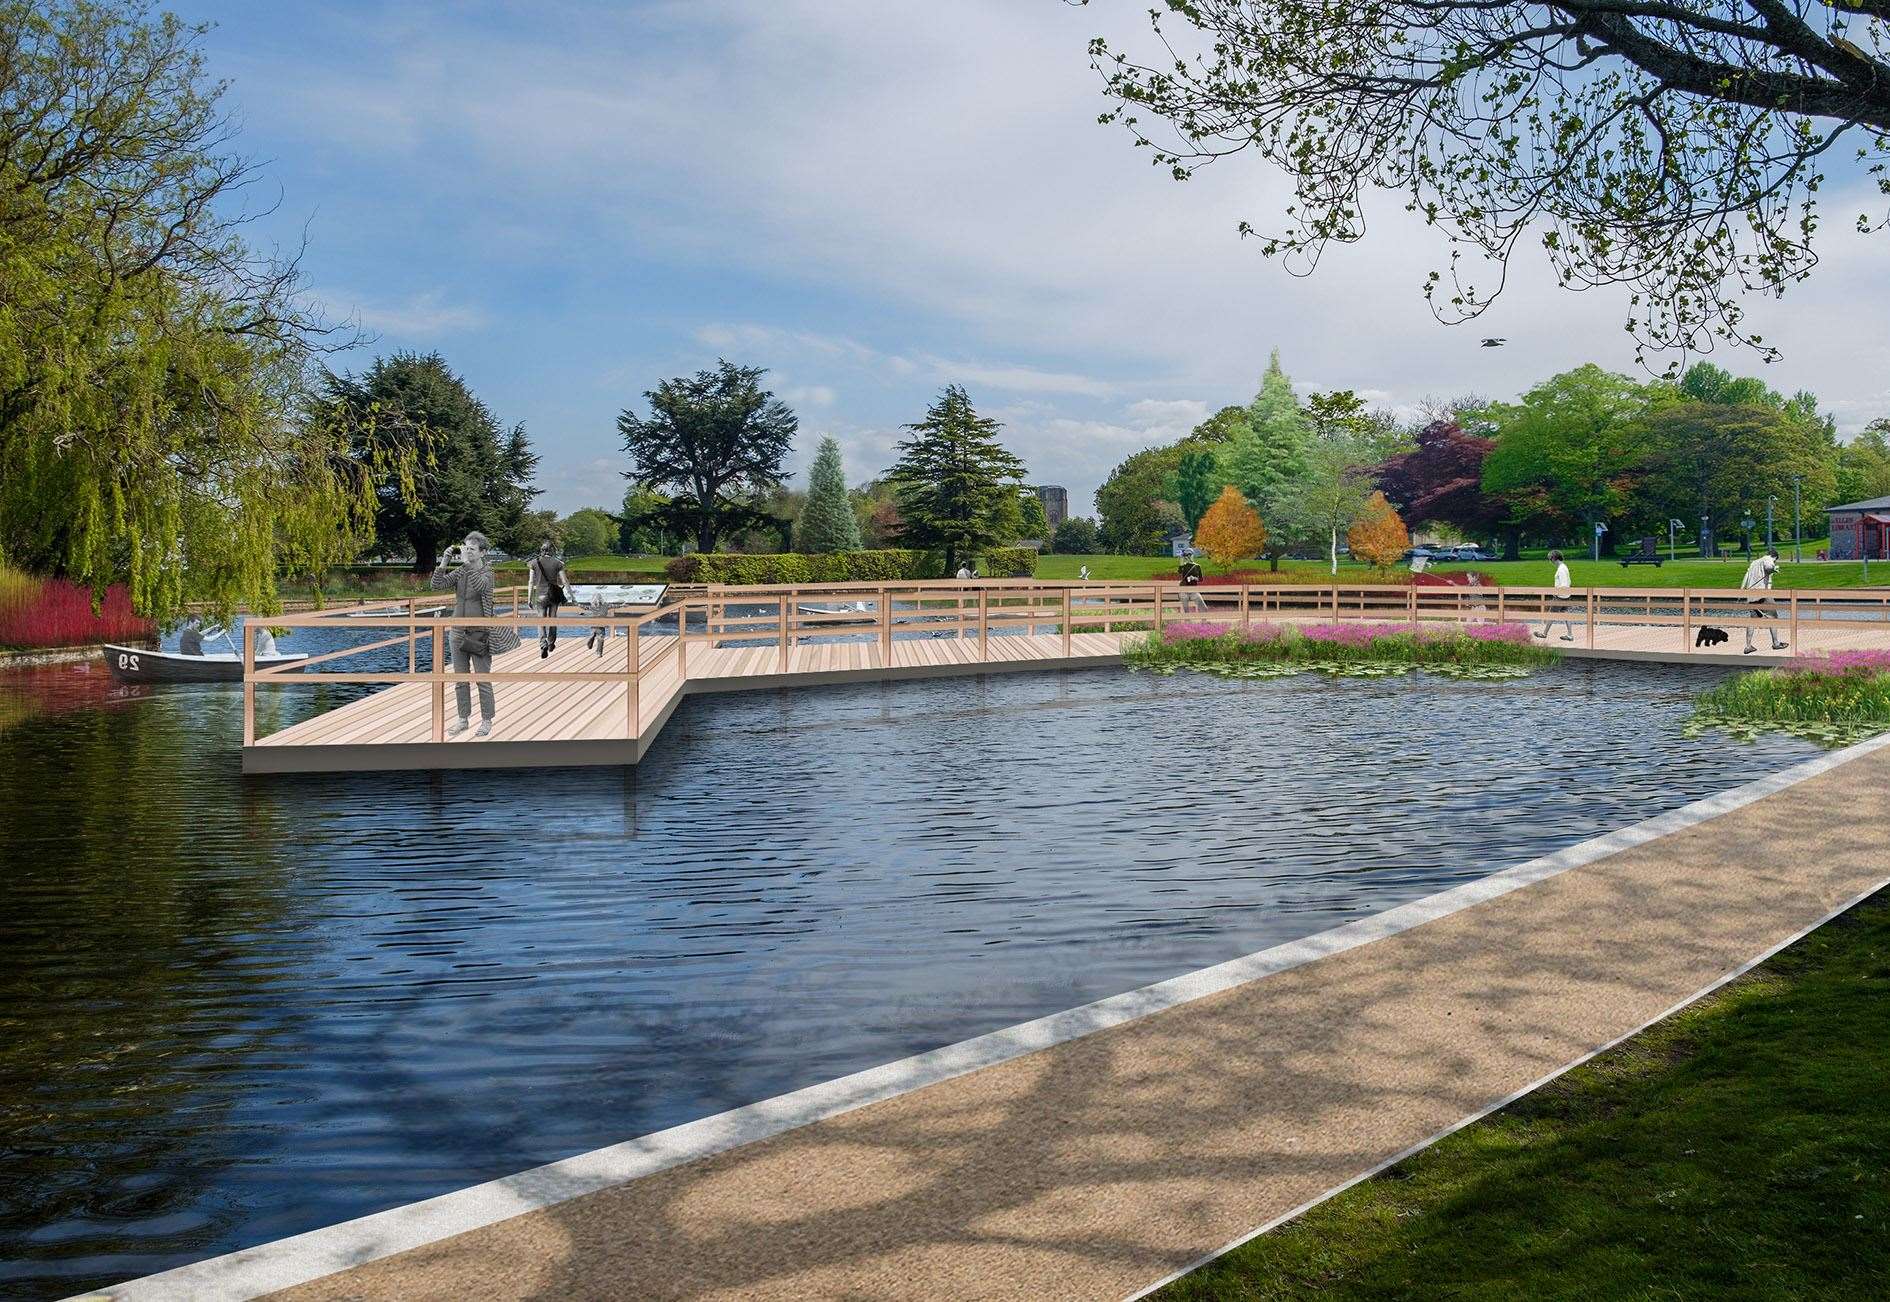 The pond and boardwalk at Cooper Park in Elgin after a potential regeneration.